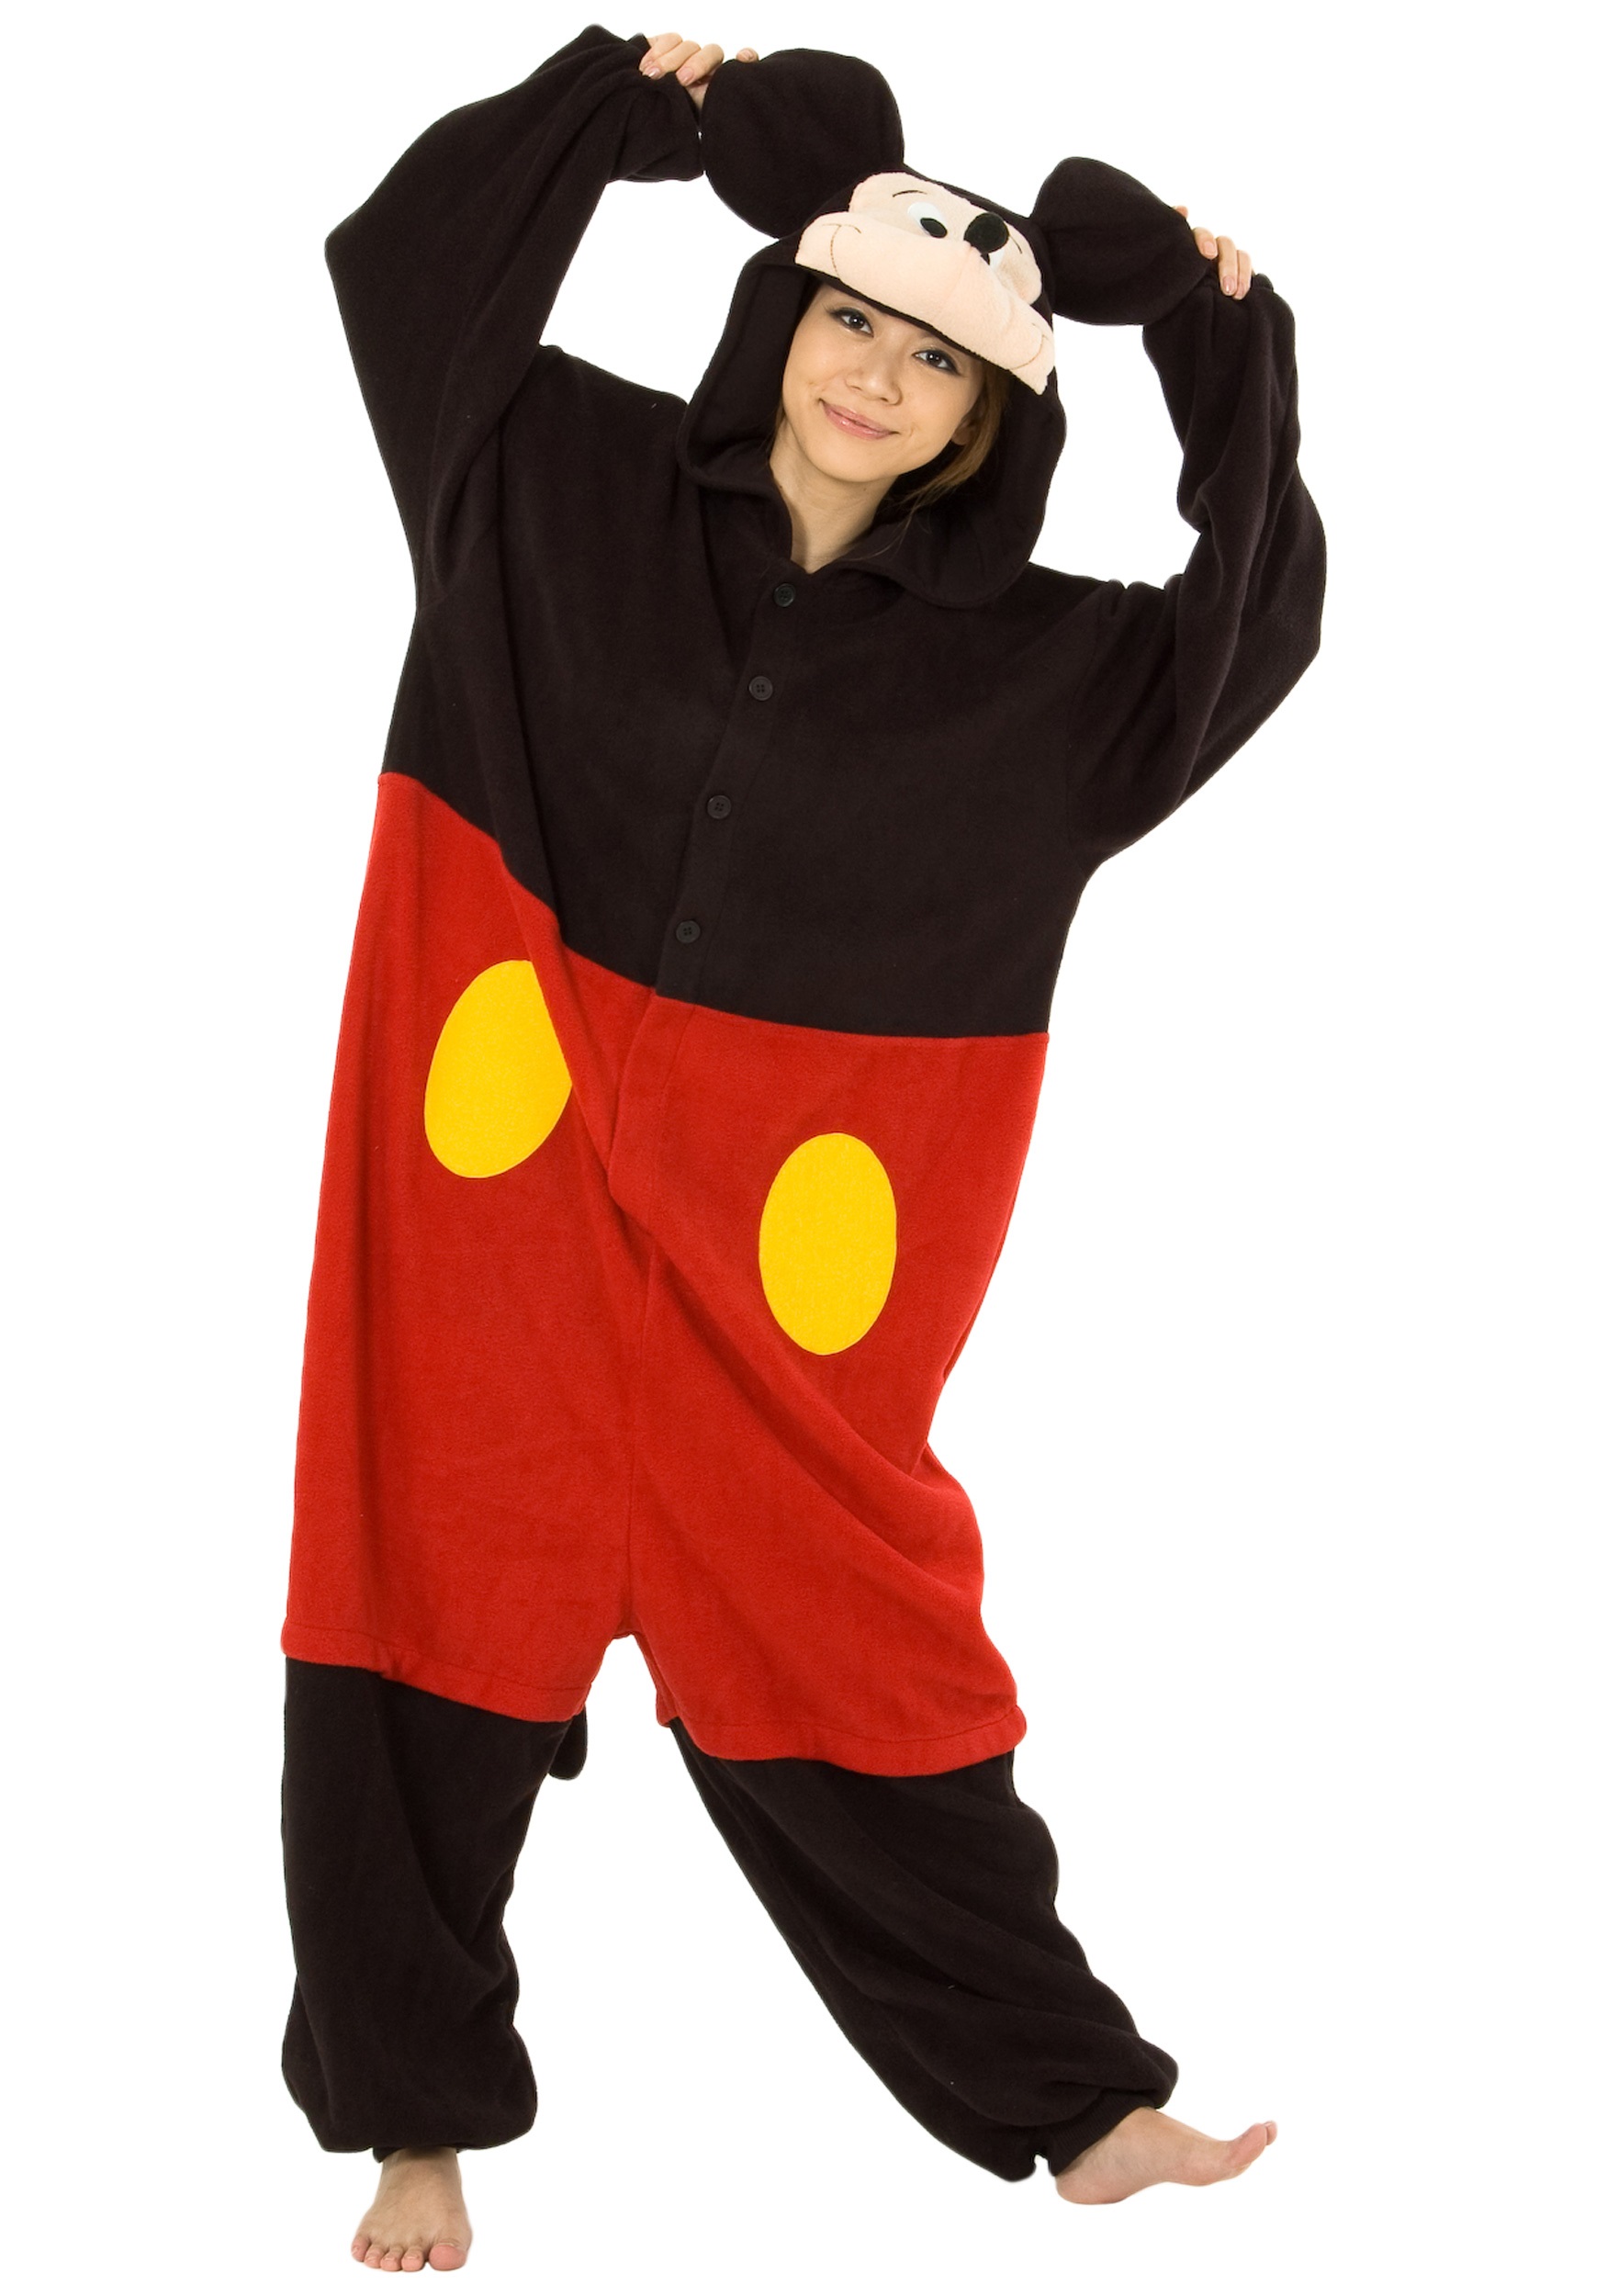 mickey mouse halloween costume